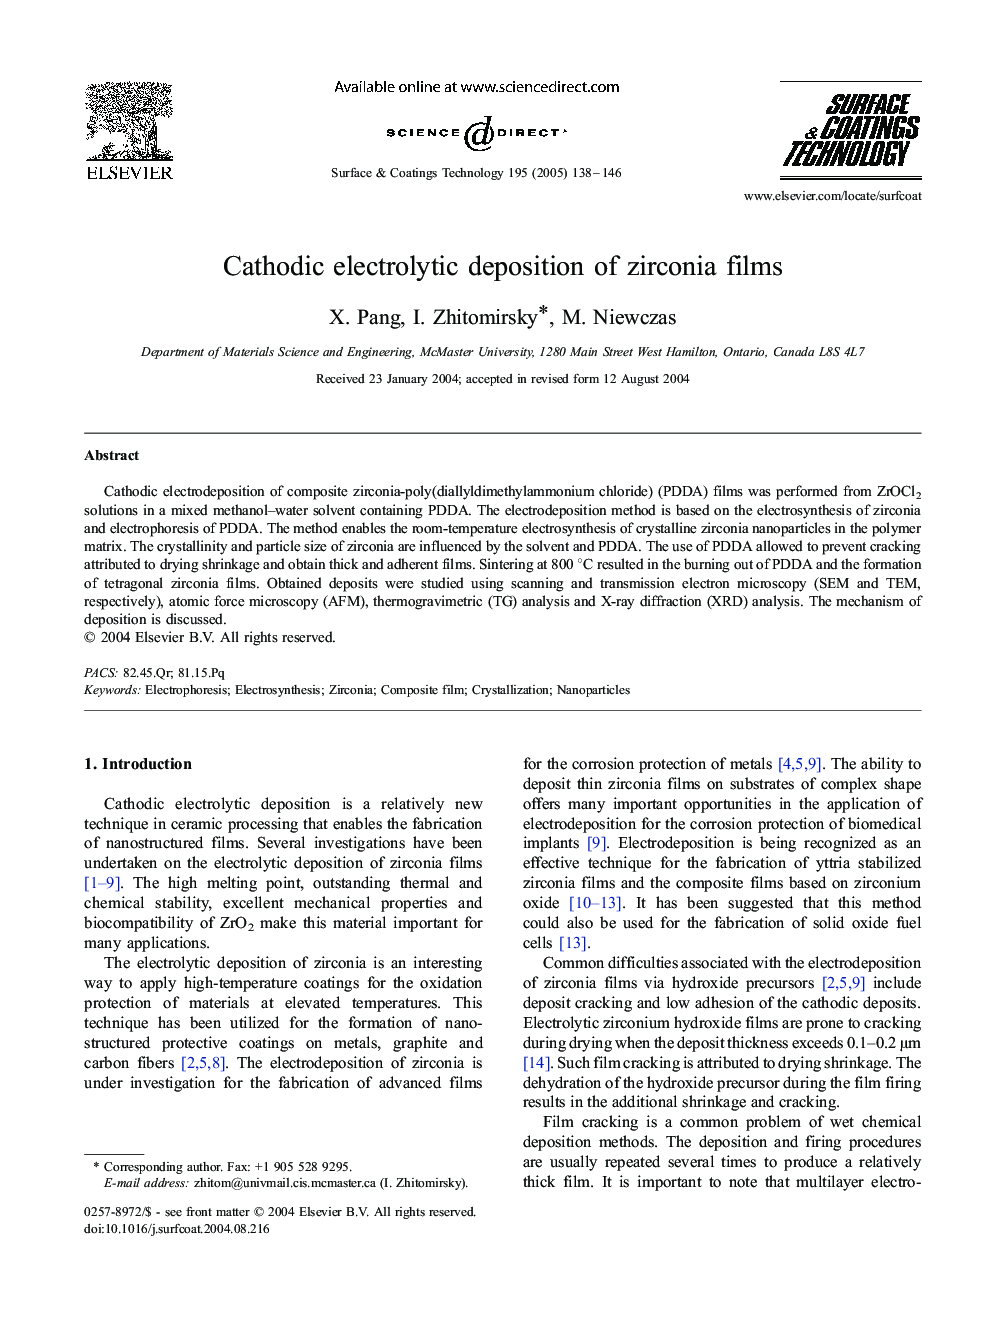 Cathodic electrolytic deposition of zirconia films